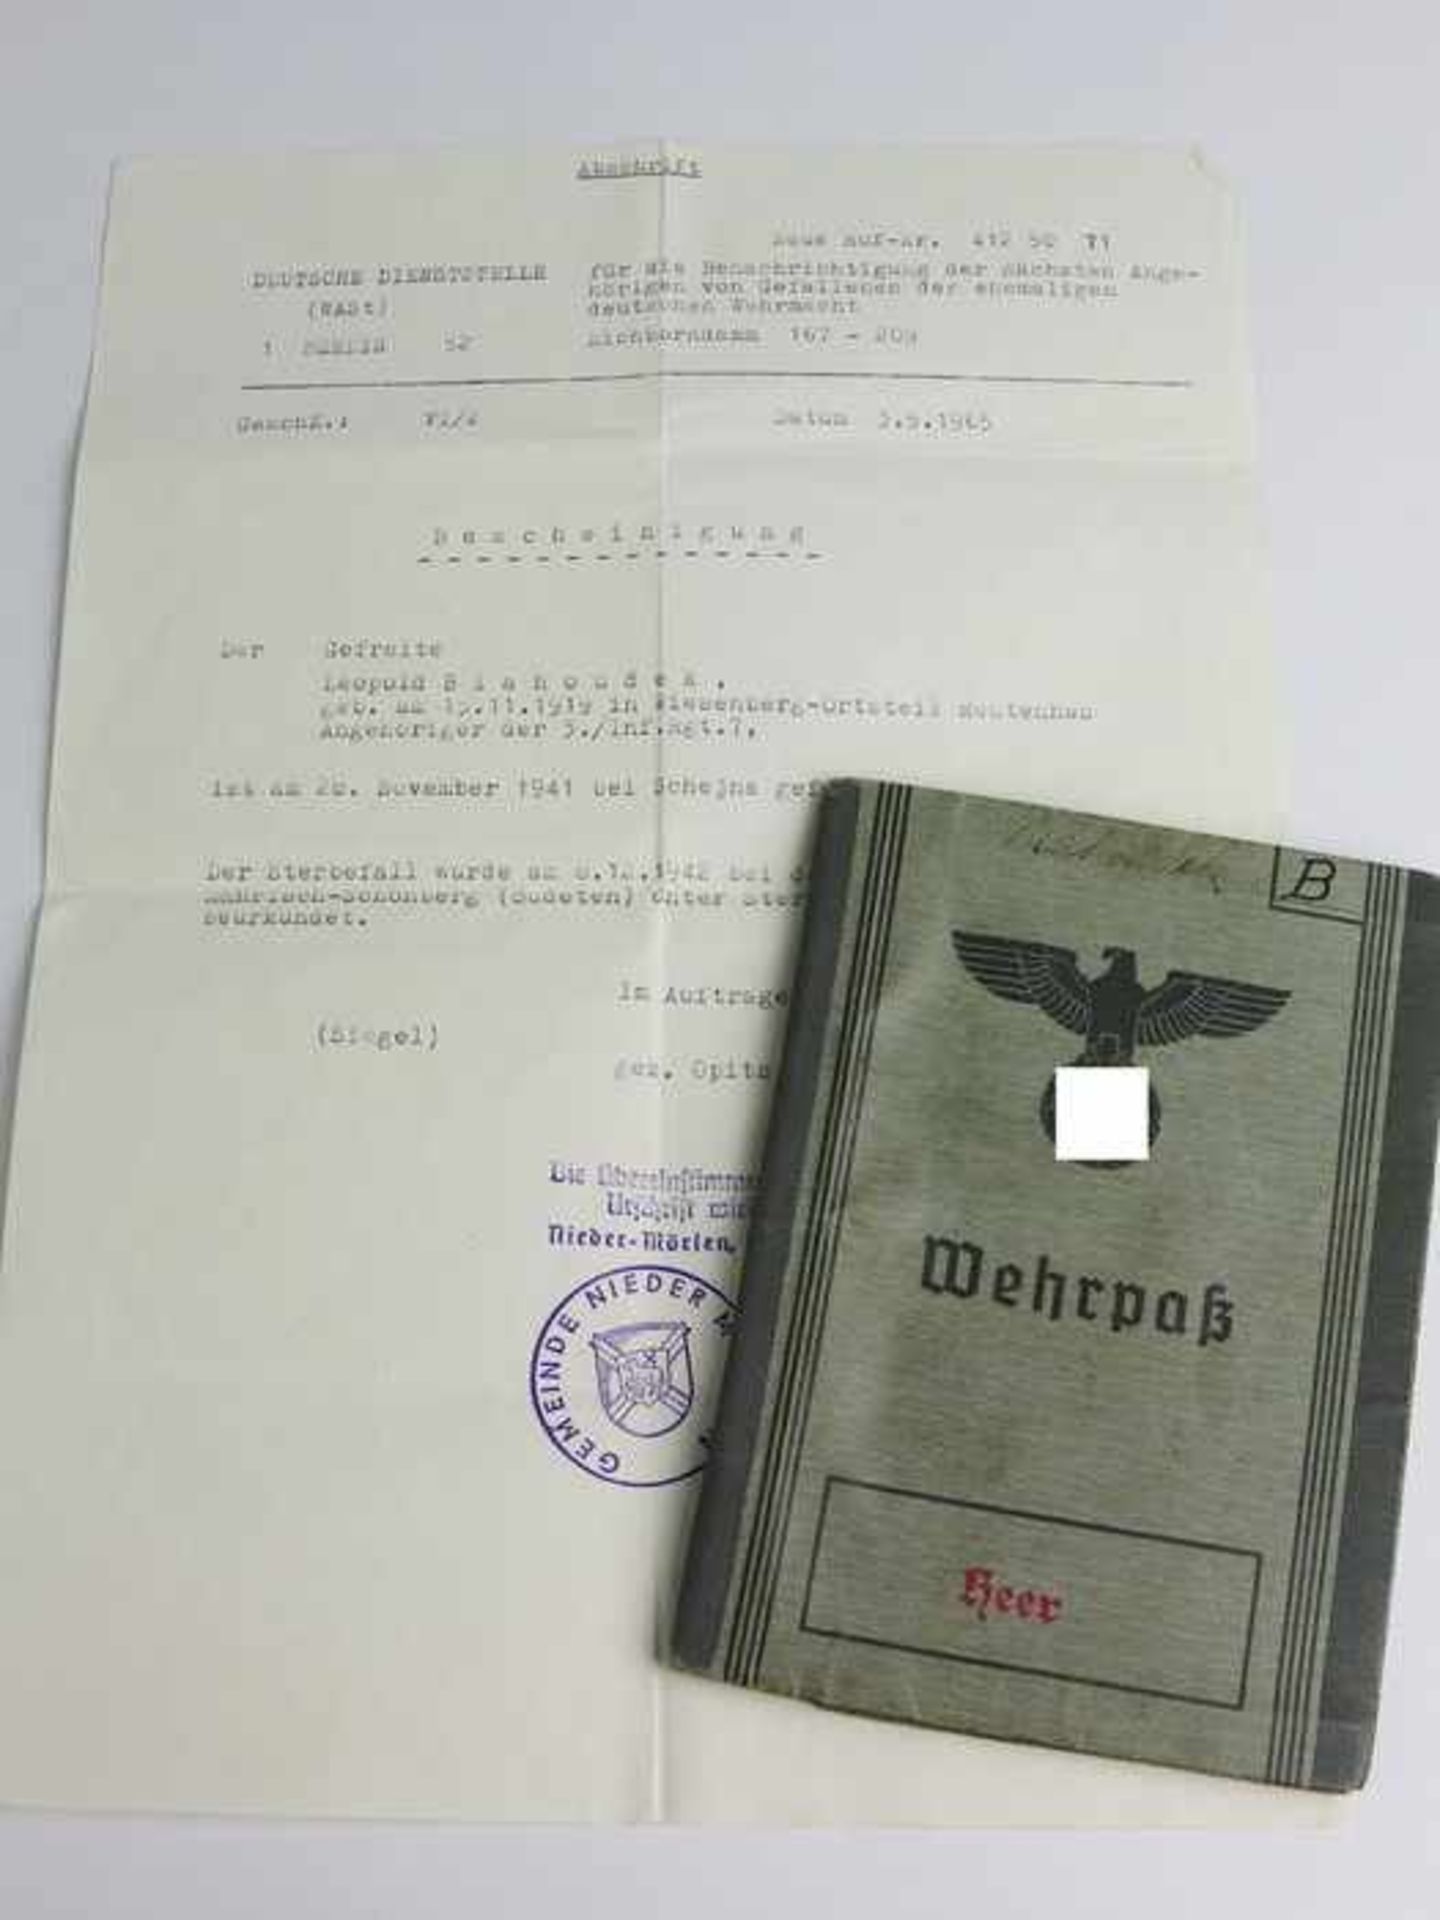 Wehrpass - WehrmachtHeer, v. Leopold Blohoudek, 3. / Inf, Rgt., 7, gefallen 20.11.1941 in